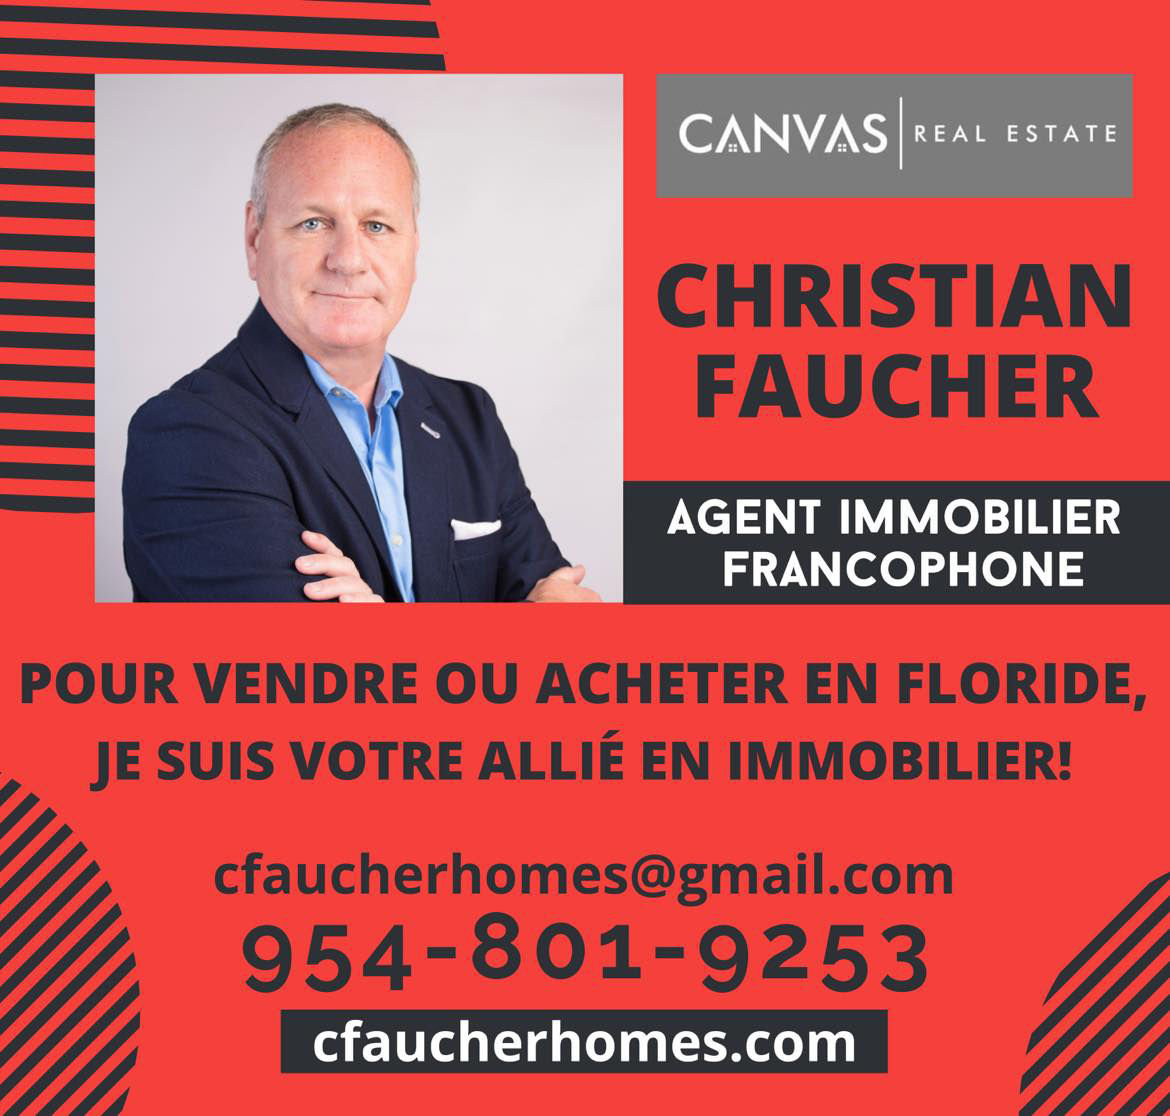 Christian Faucher agent immobilier en Floride